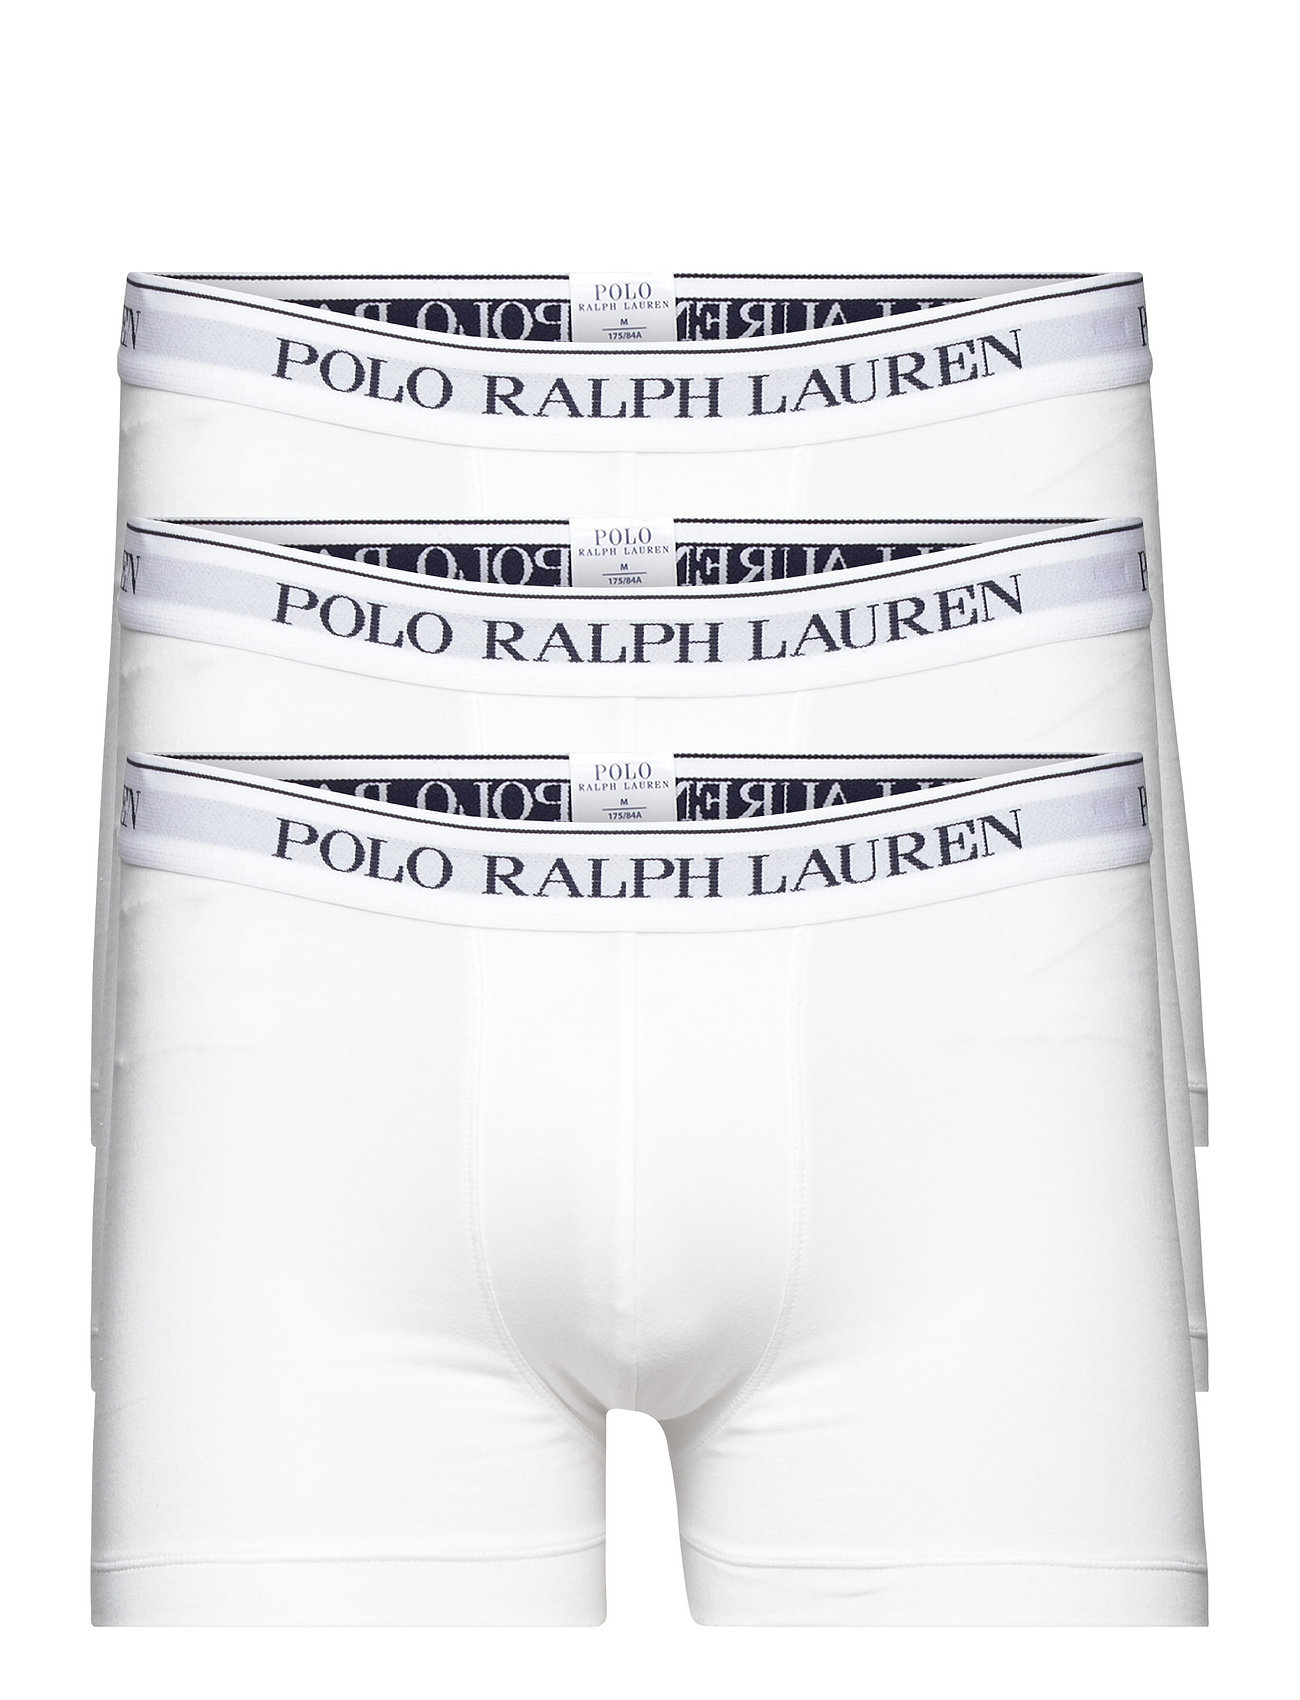 Polo Ralph Lauren Underwear Stretch Cotton Trunk 3-pack - Boxers